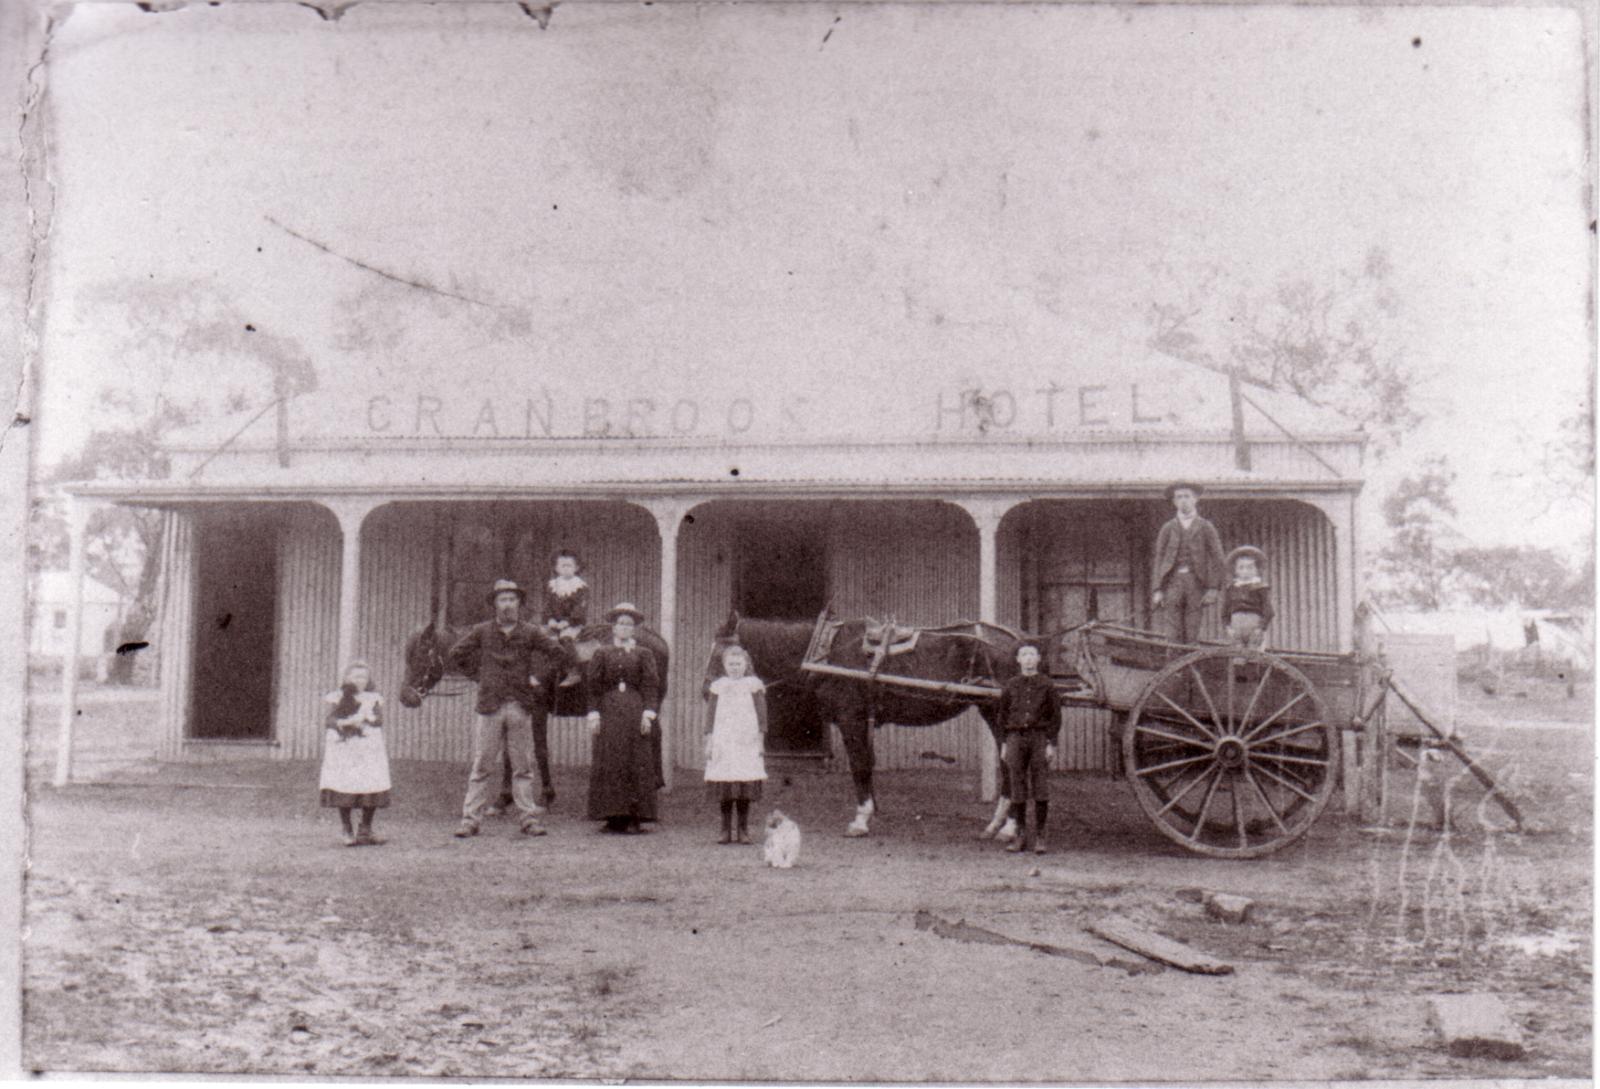 George Dunn & Family - Cranbrook Hotel circa 1889